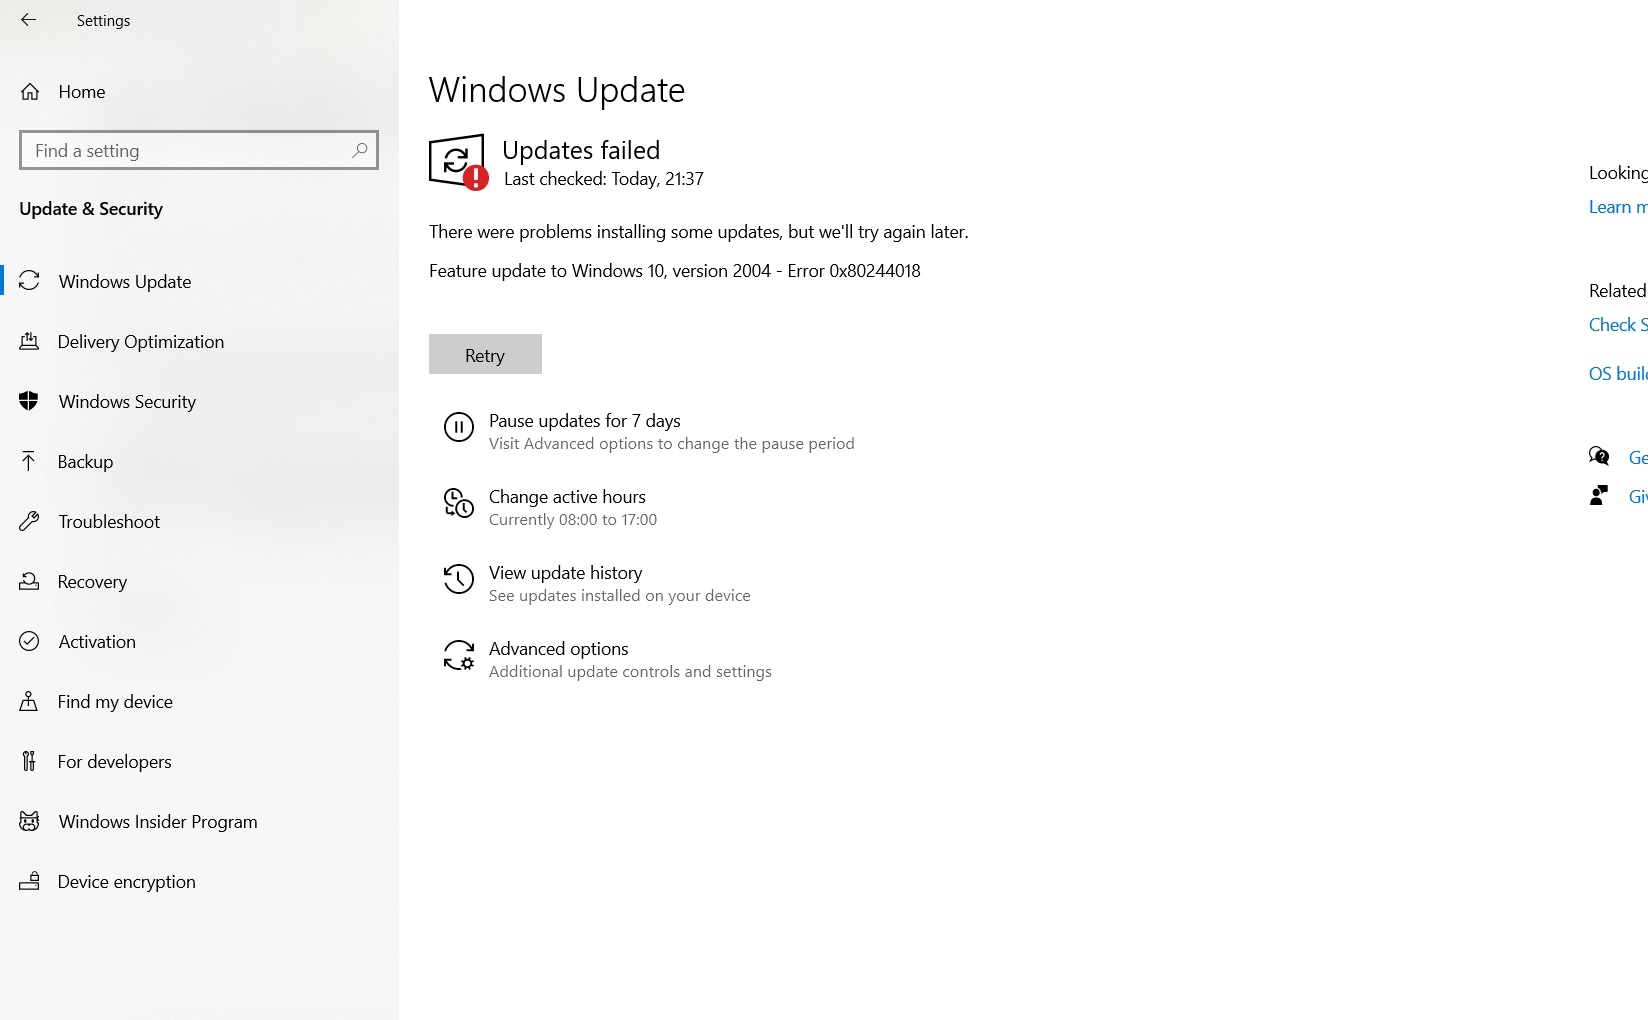 Feature update to Windows 10, version 2004 - Error 0x80244018 53abd86d-c0d6-4de0-8b51-9a8c8b88990e?upload=true.png